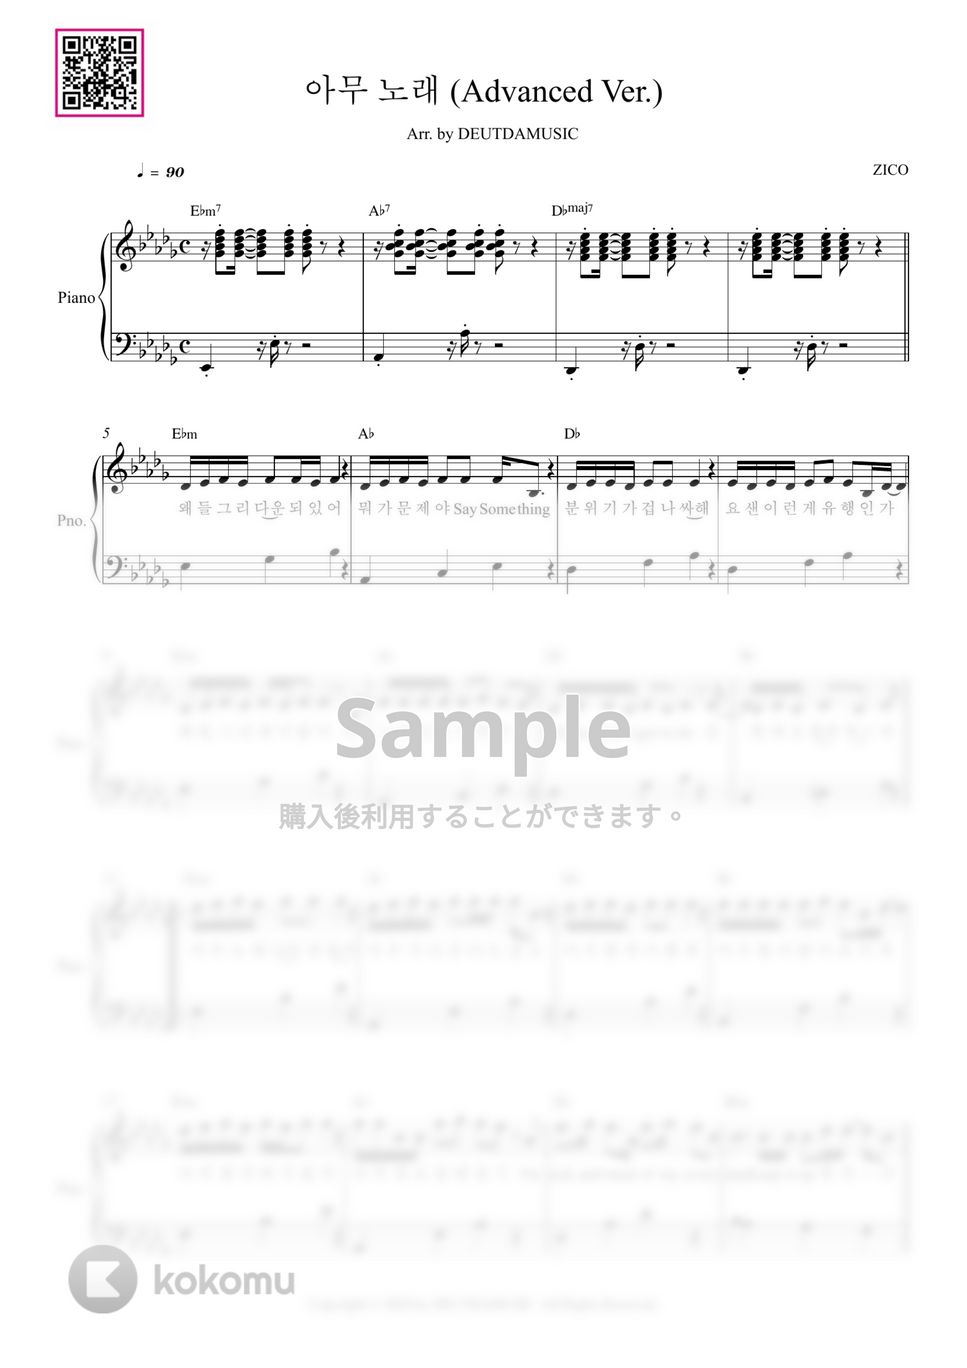 ZICO(ジコ) - Any Song (中級バージョン) by DEUTDAMUSIC